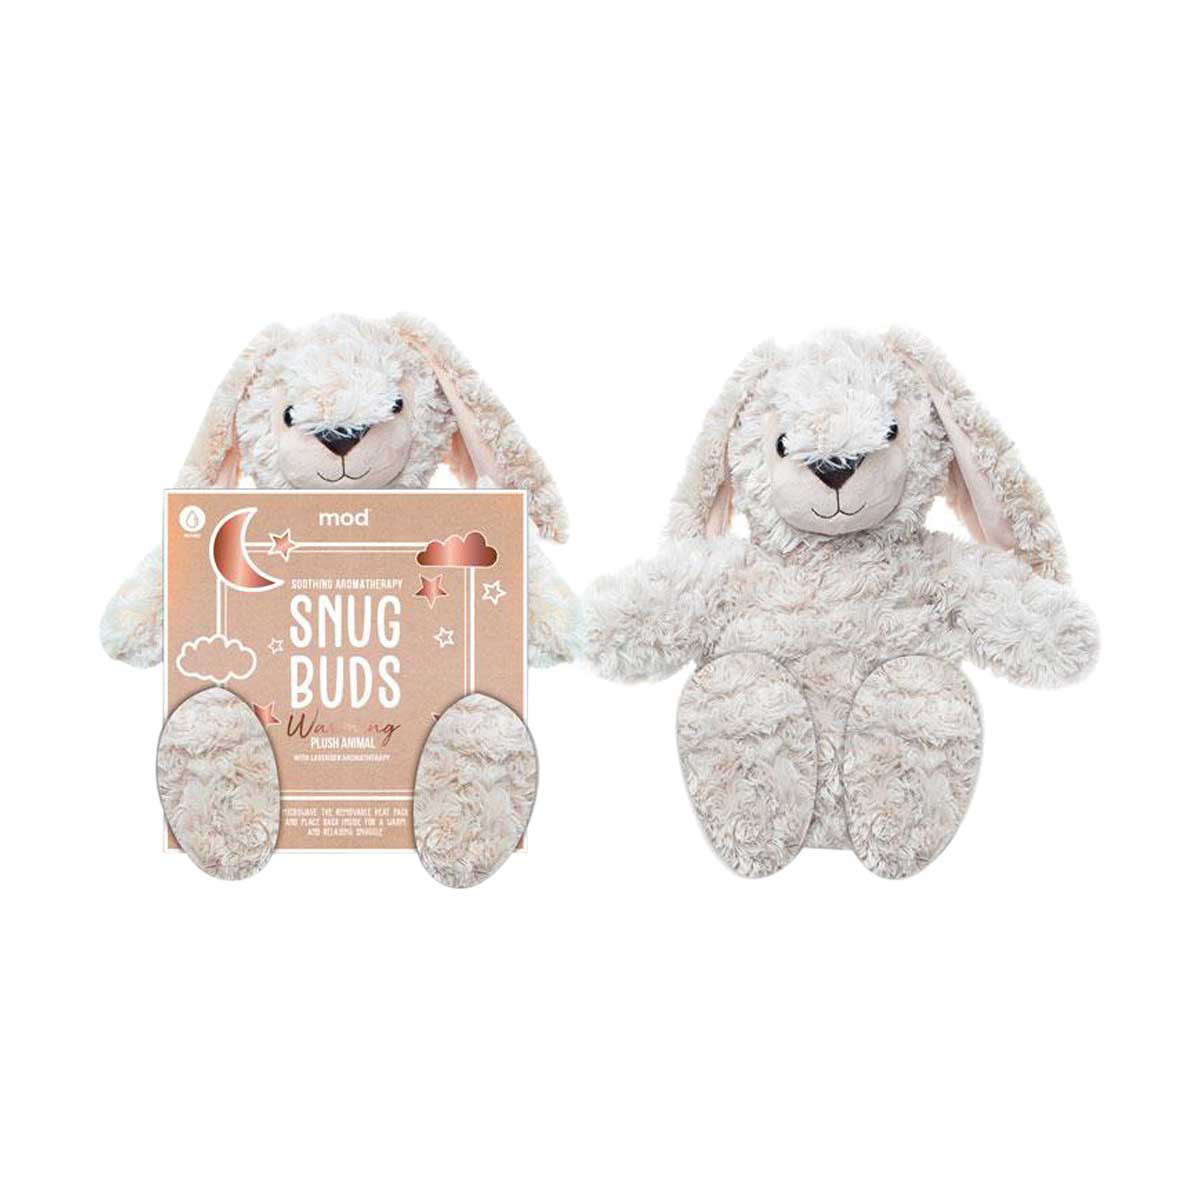 Plush Bunny PJ and bed warmer (brown) - Hotties Thermal Packs